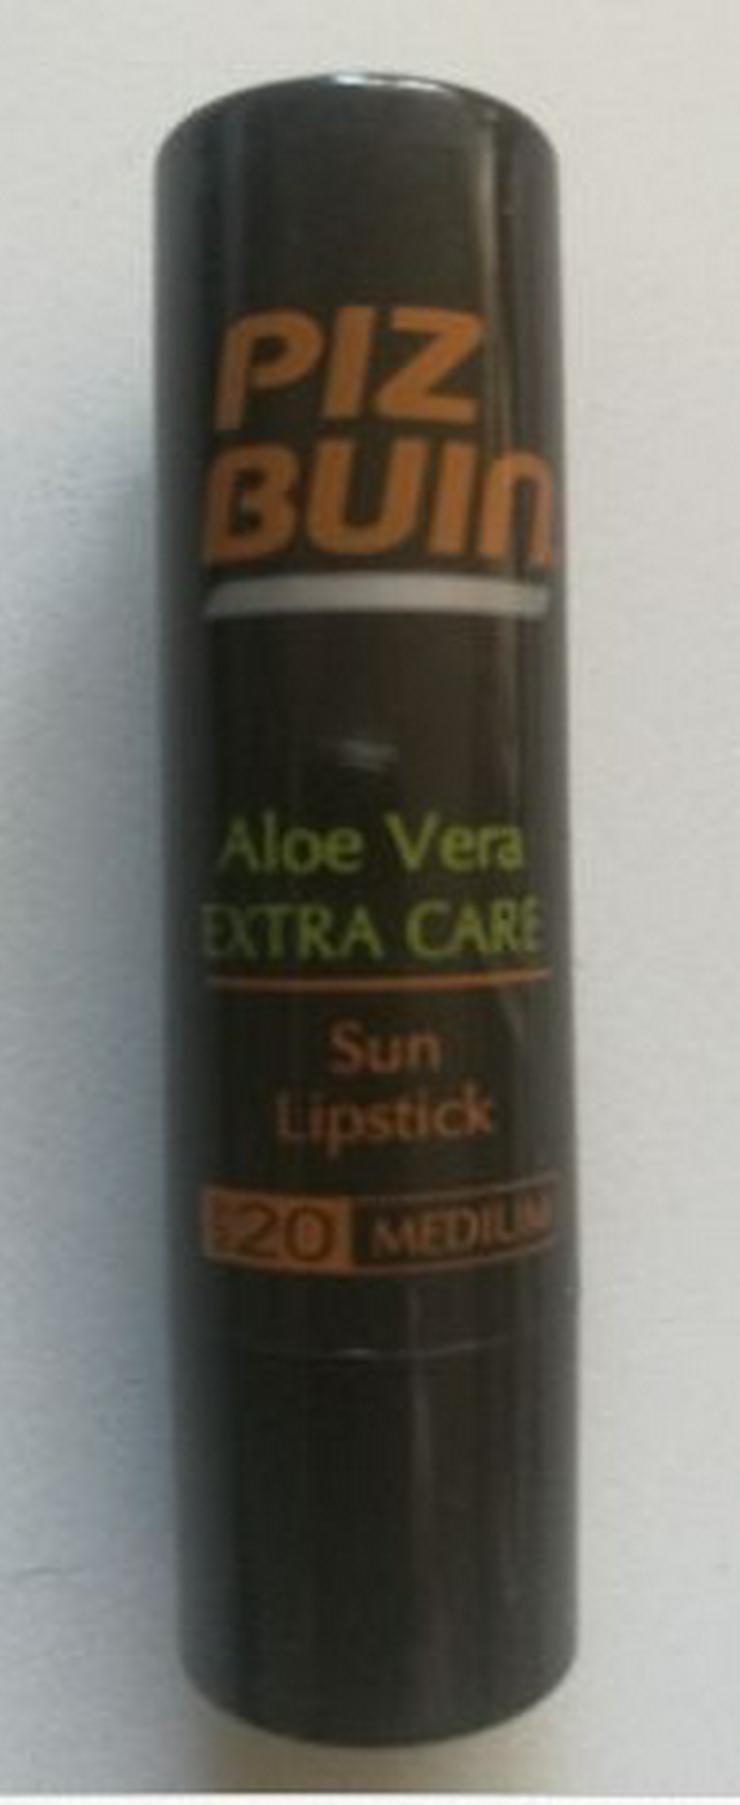 PIZ BUIN AloeVera ExtraCare Sun Lipstick LSF 20